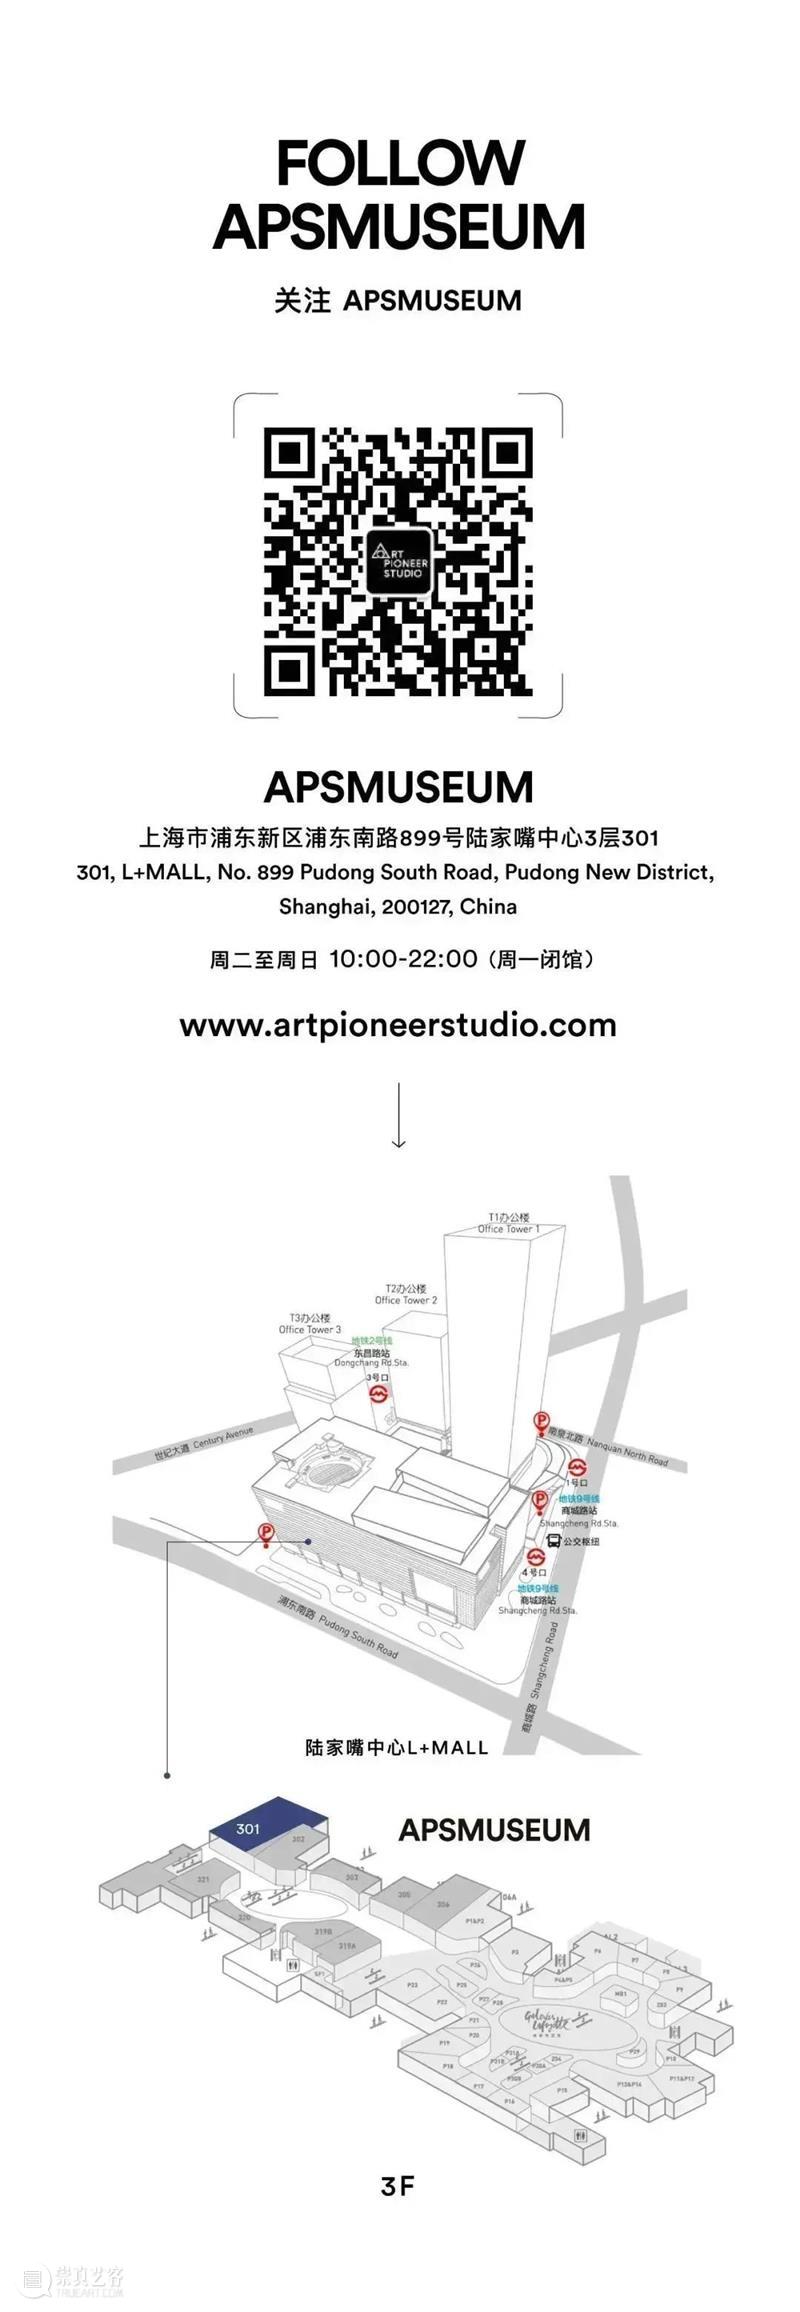 Announcement | Temporary closure of APSMUSEUM Announcement Work architecture design fashion build space its andA Shanghai 崇真艺客